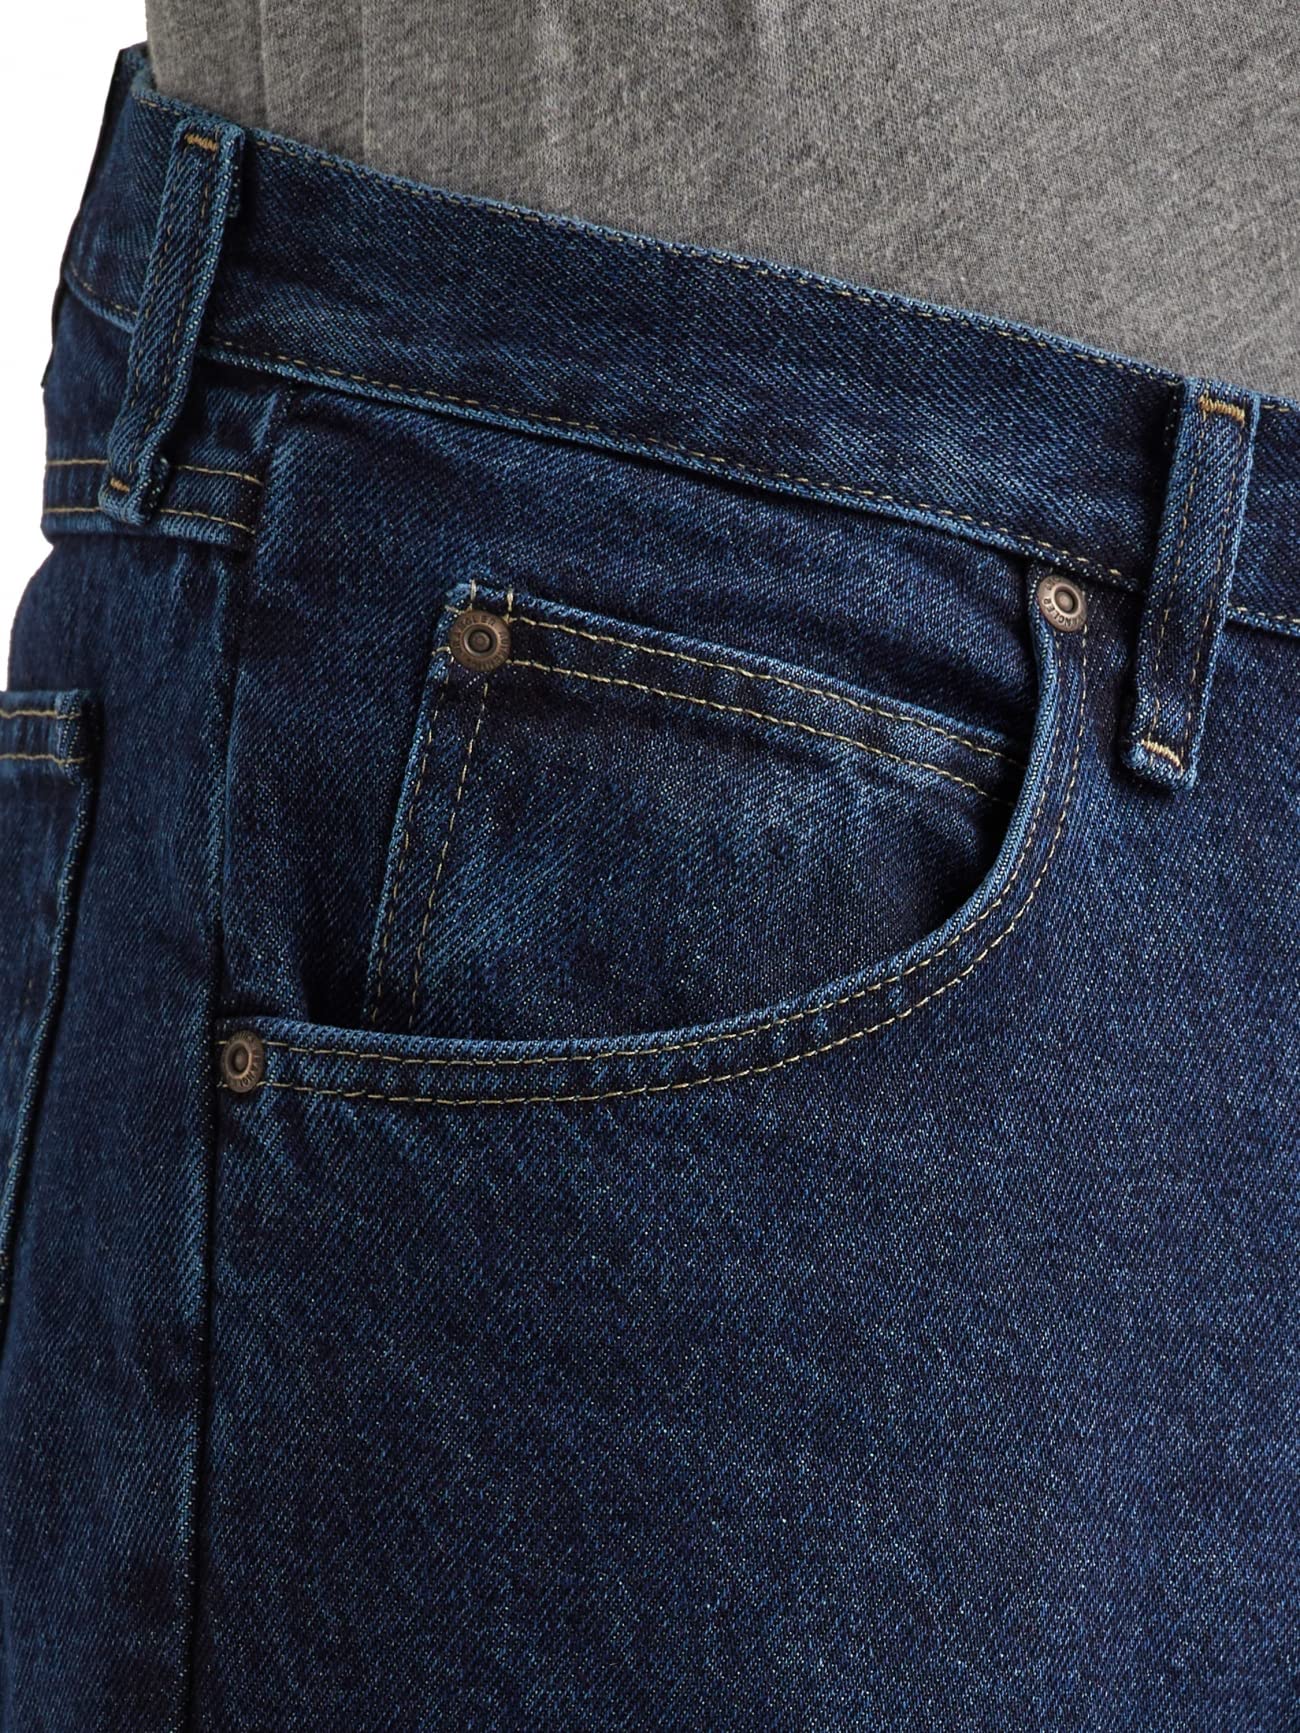 Wrangler Authentics Men's Big & Tall Classic 5-Pocket Relaxed Fit Cotton Jean, Dark Rinse, 44W X 36L